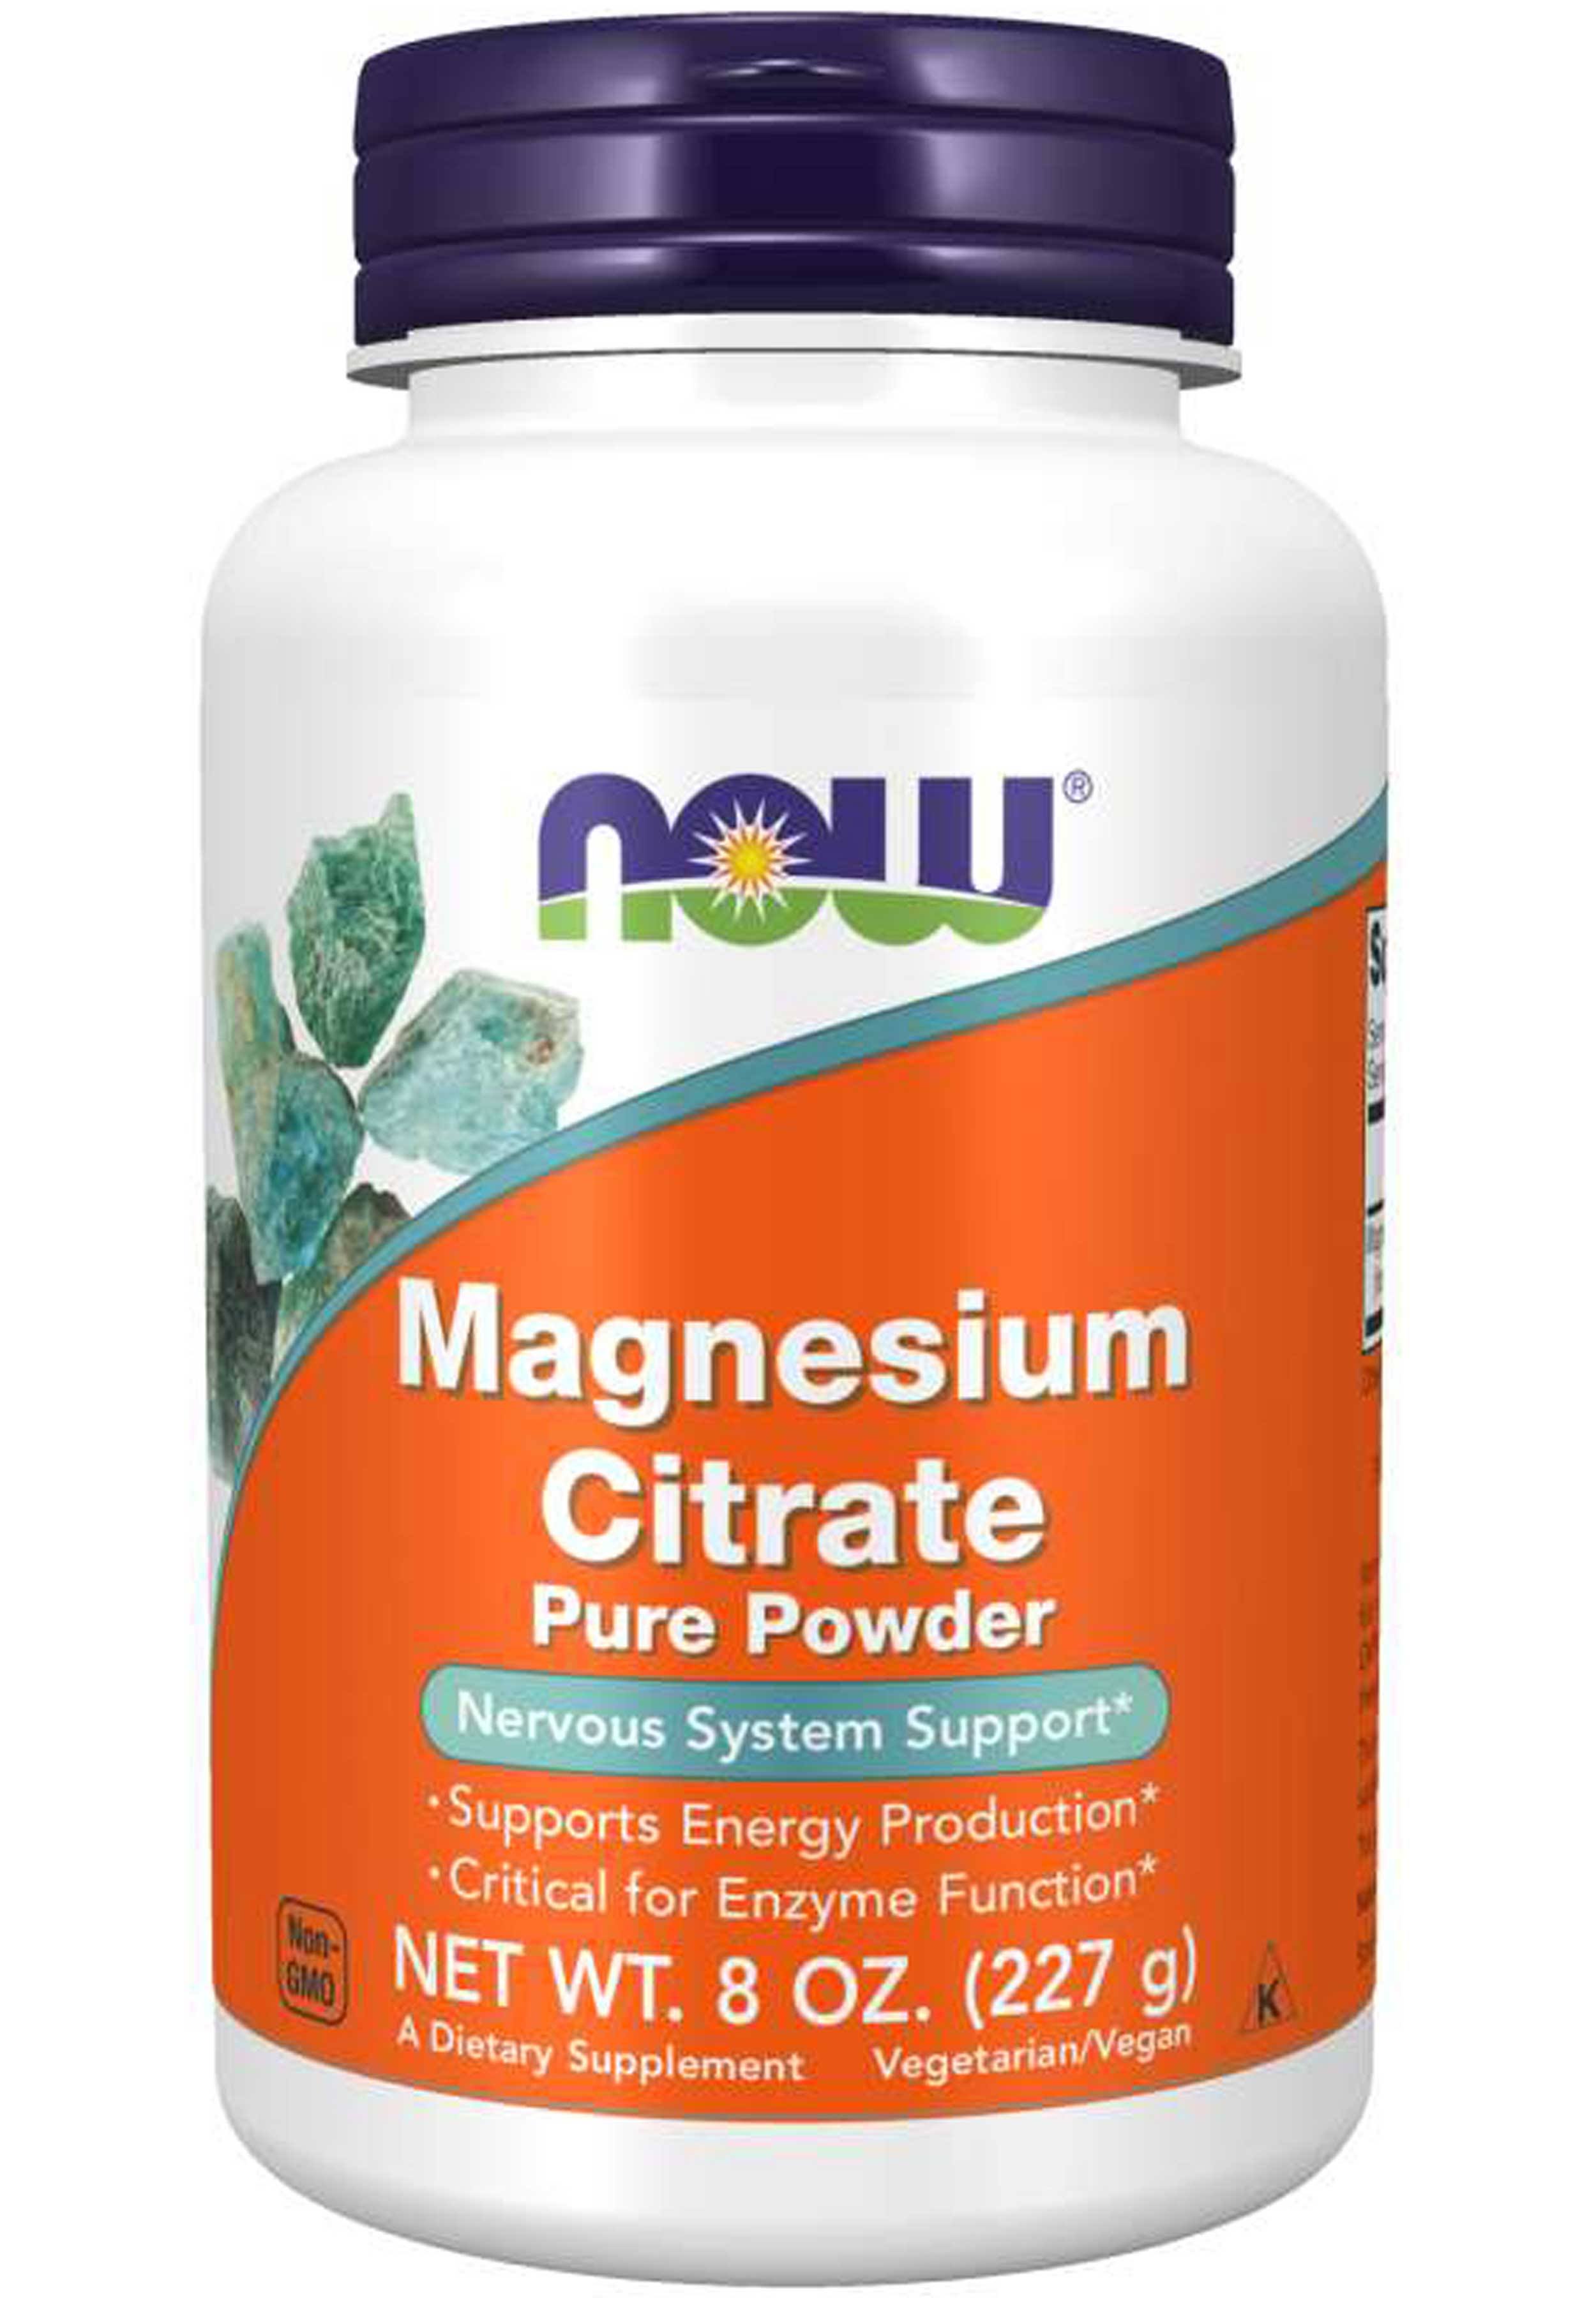 Now Magnesium Citrate Pure Powder - 8 oz